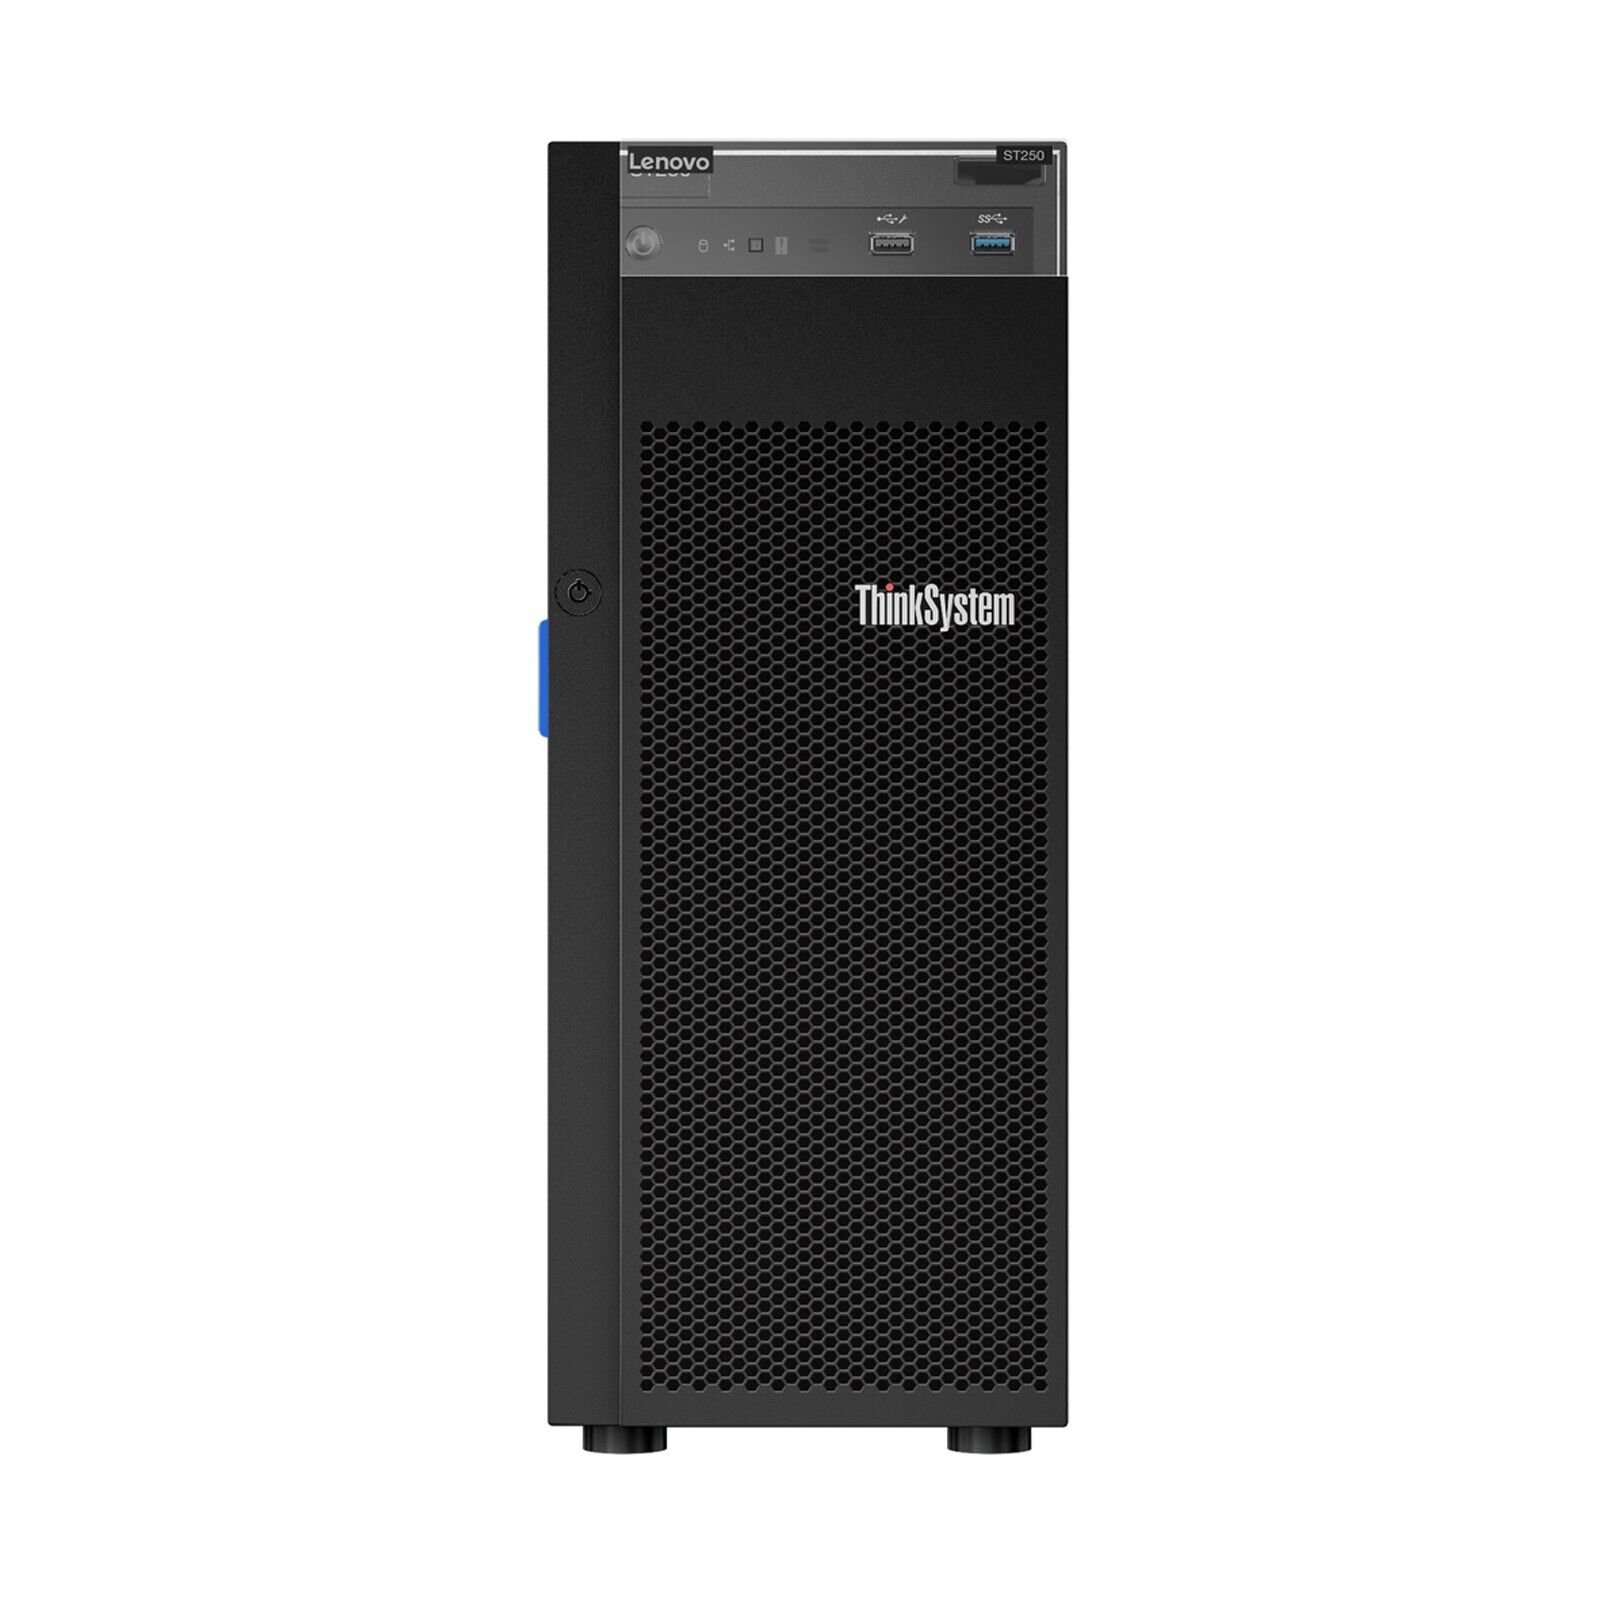 Lenovo ThinkServer TS460 Tower Server: E3-1220 v6 3.00GHz 4-Core, 16GB DDR4 RAM